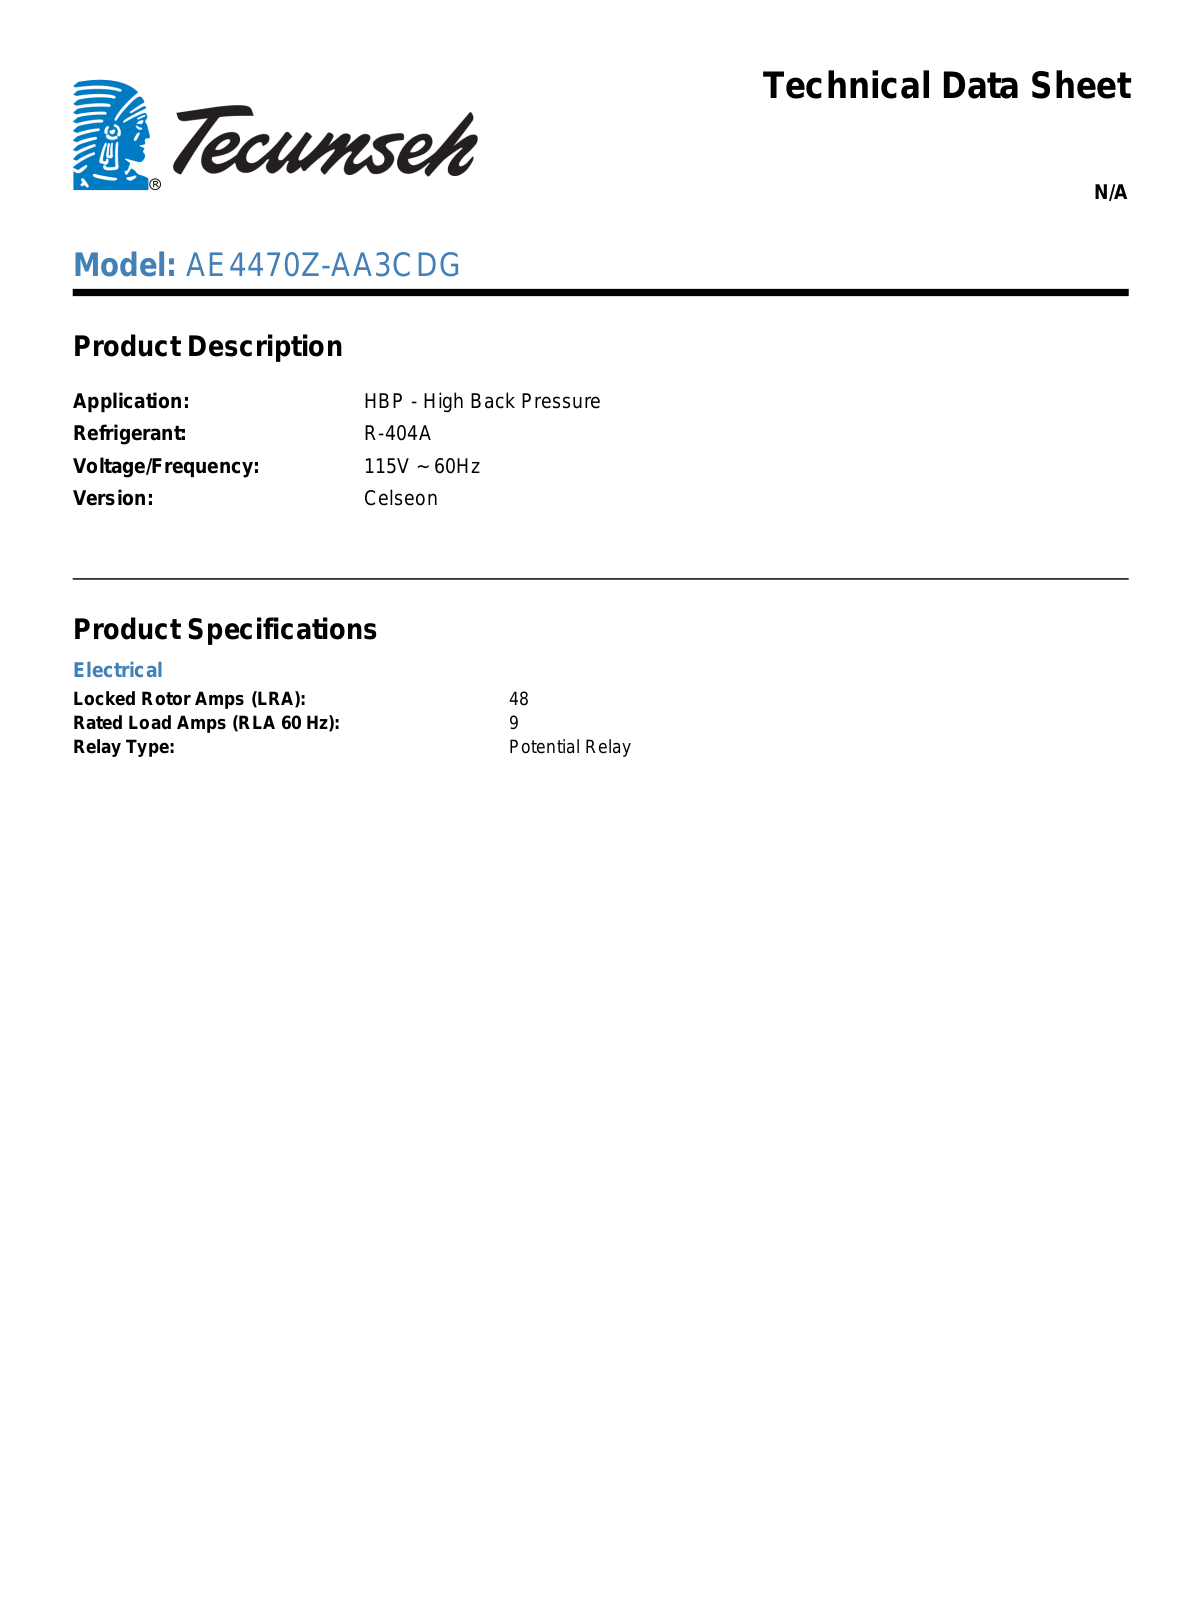 Tecumseh AE4470Z-AA3CDG User Manual